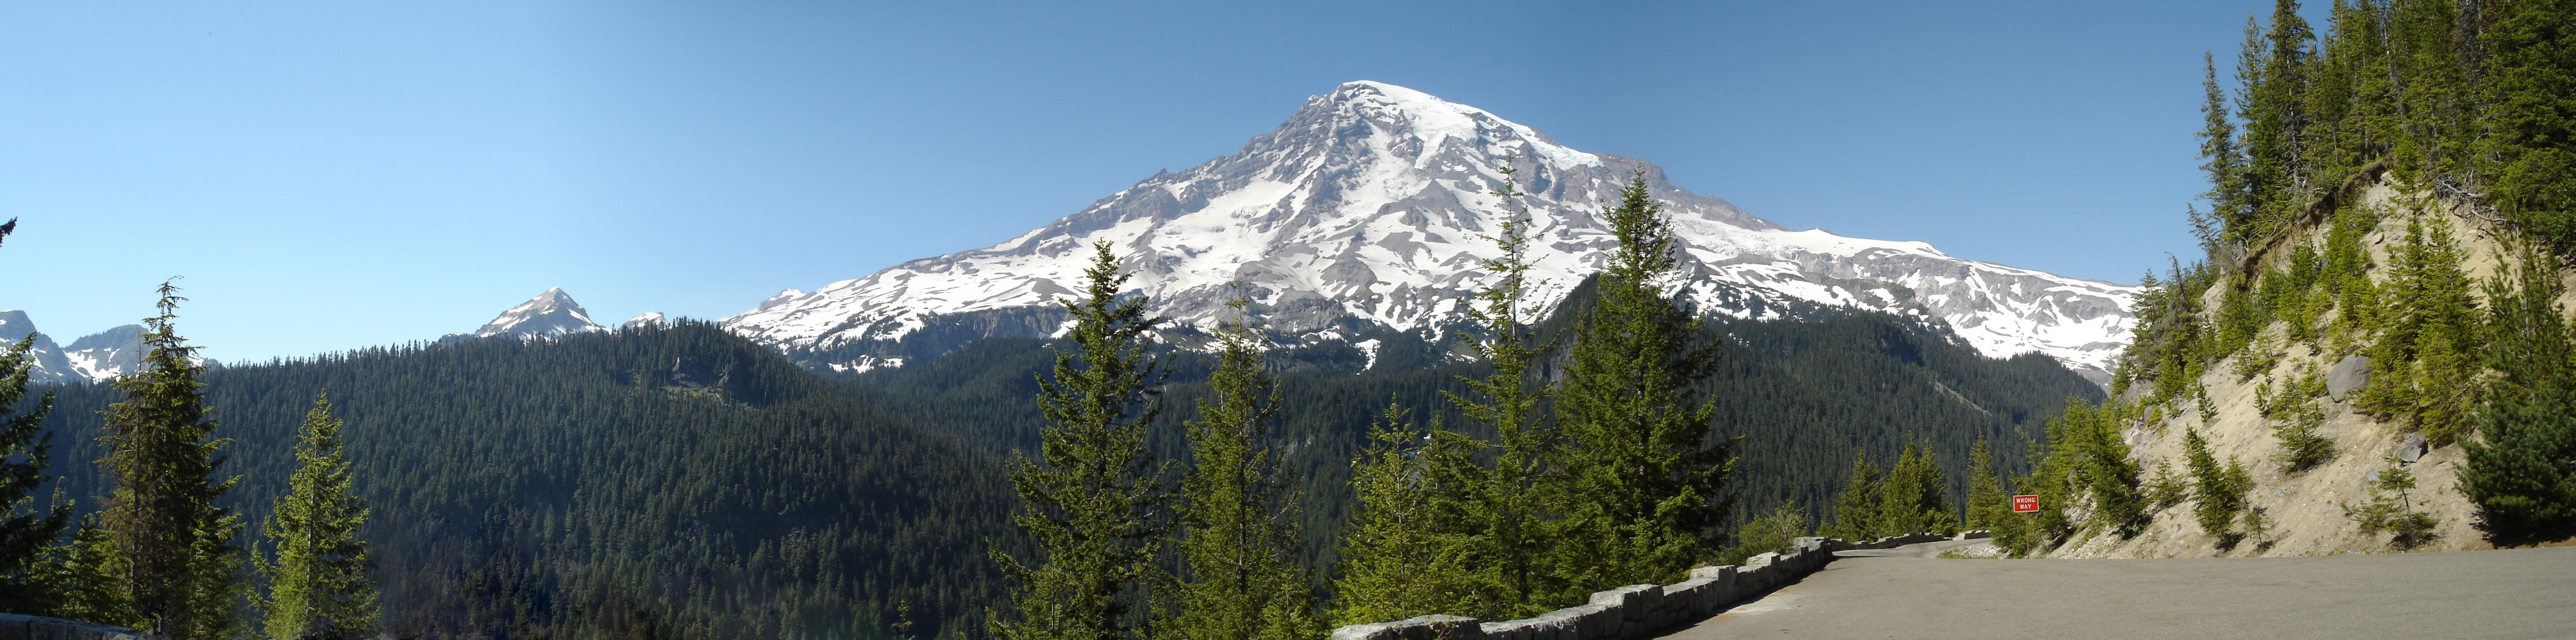 Mount_Rainier_panorama_2.jpg